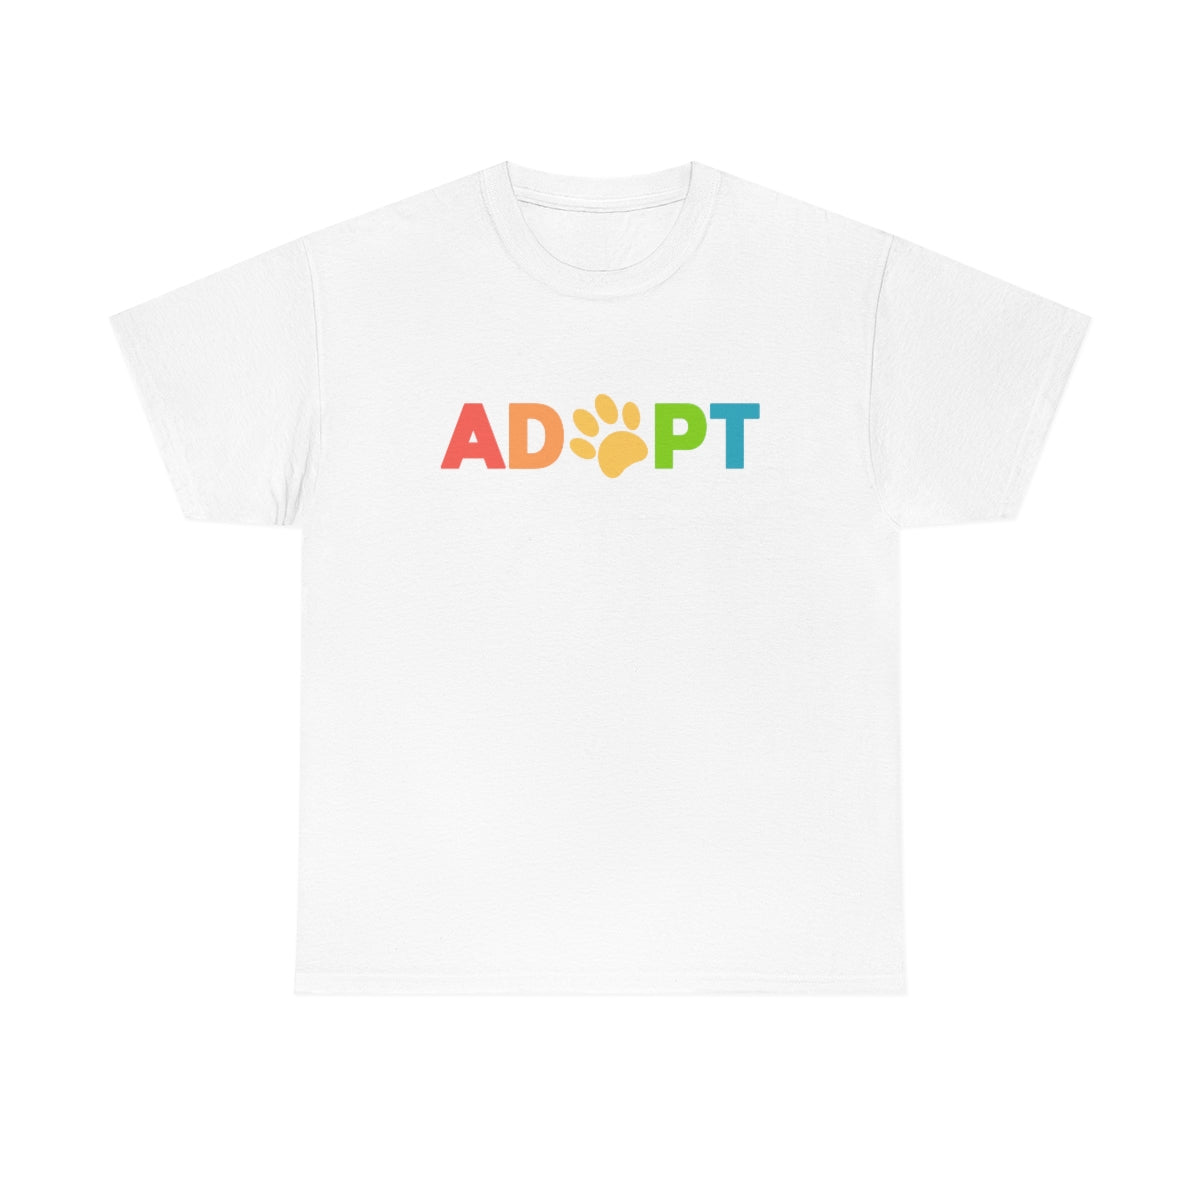 Adopt Rainbow | Text Tees - Detezi Designs-19004266421444178180